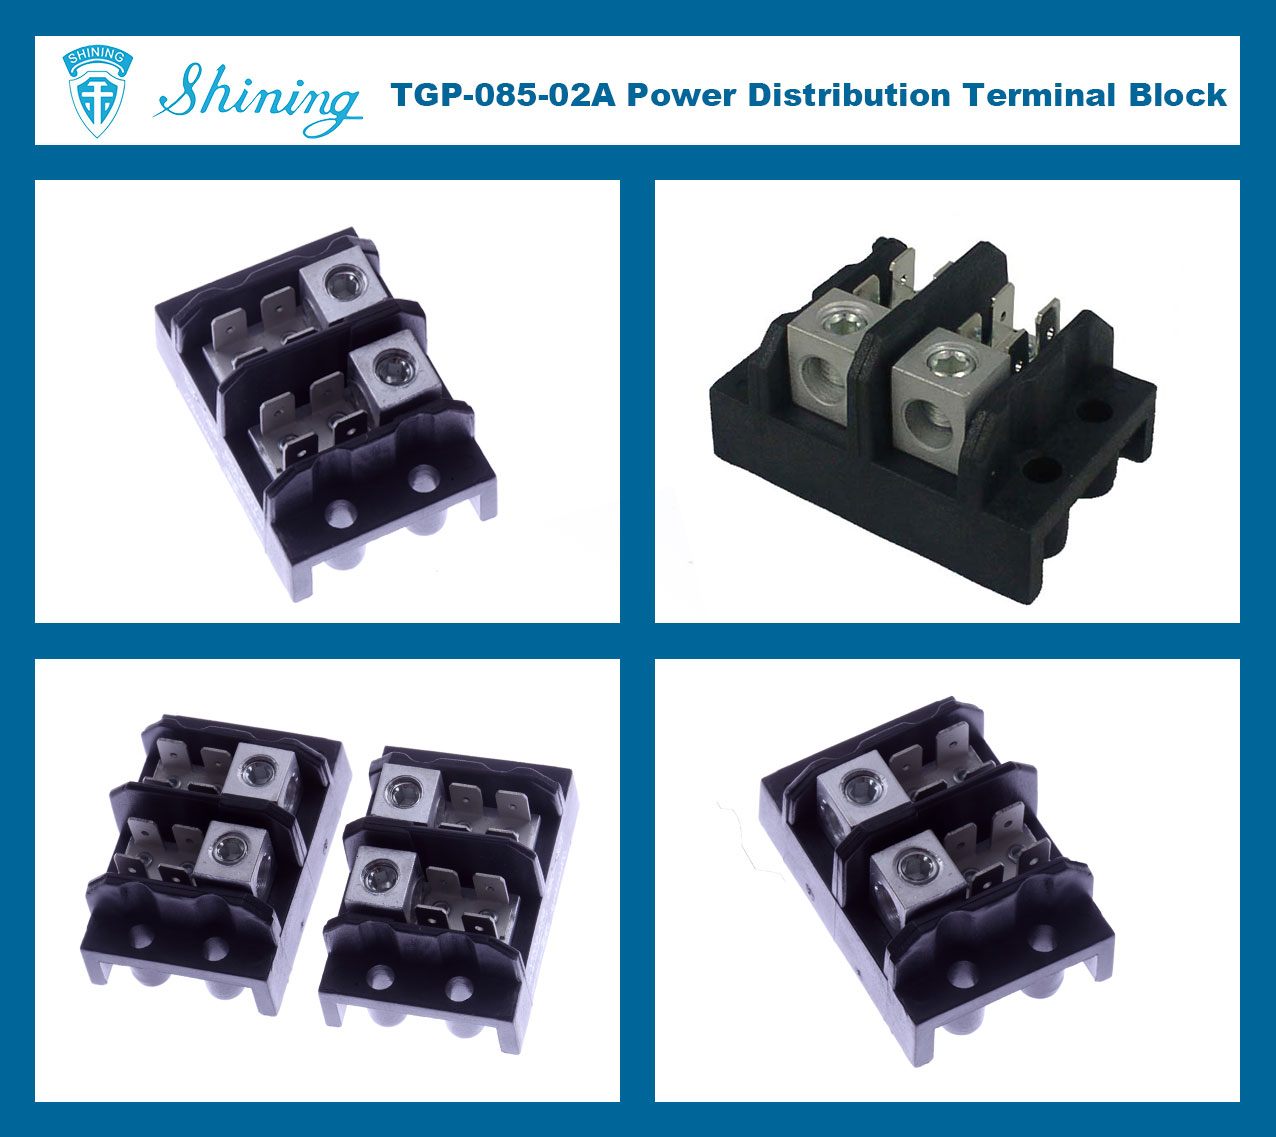 SHINING-TGP-085-02A 600V 85A 2 Pole Power Terminal Block